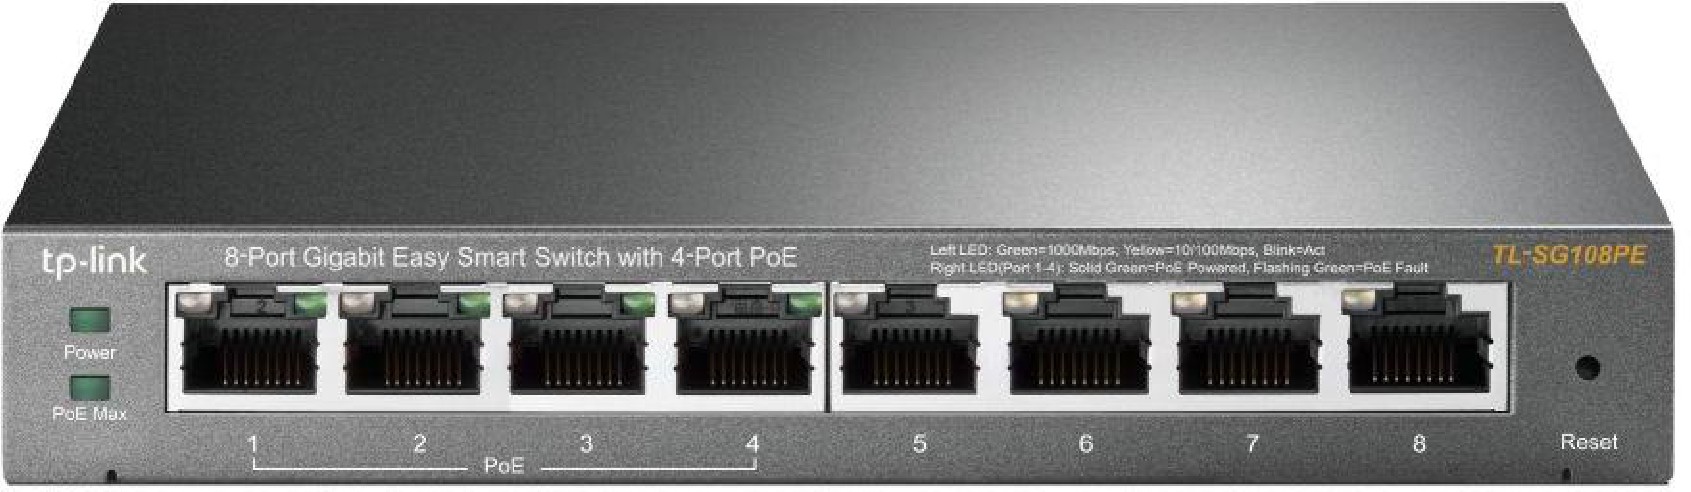 8 Port Gigabit Easy Smart Switch with 4 Port PoE